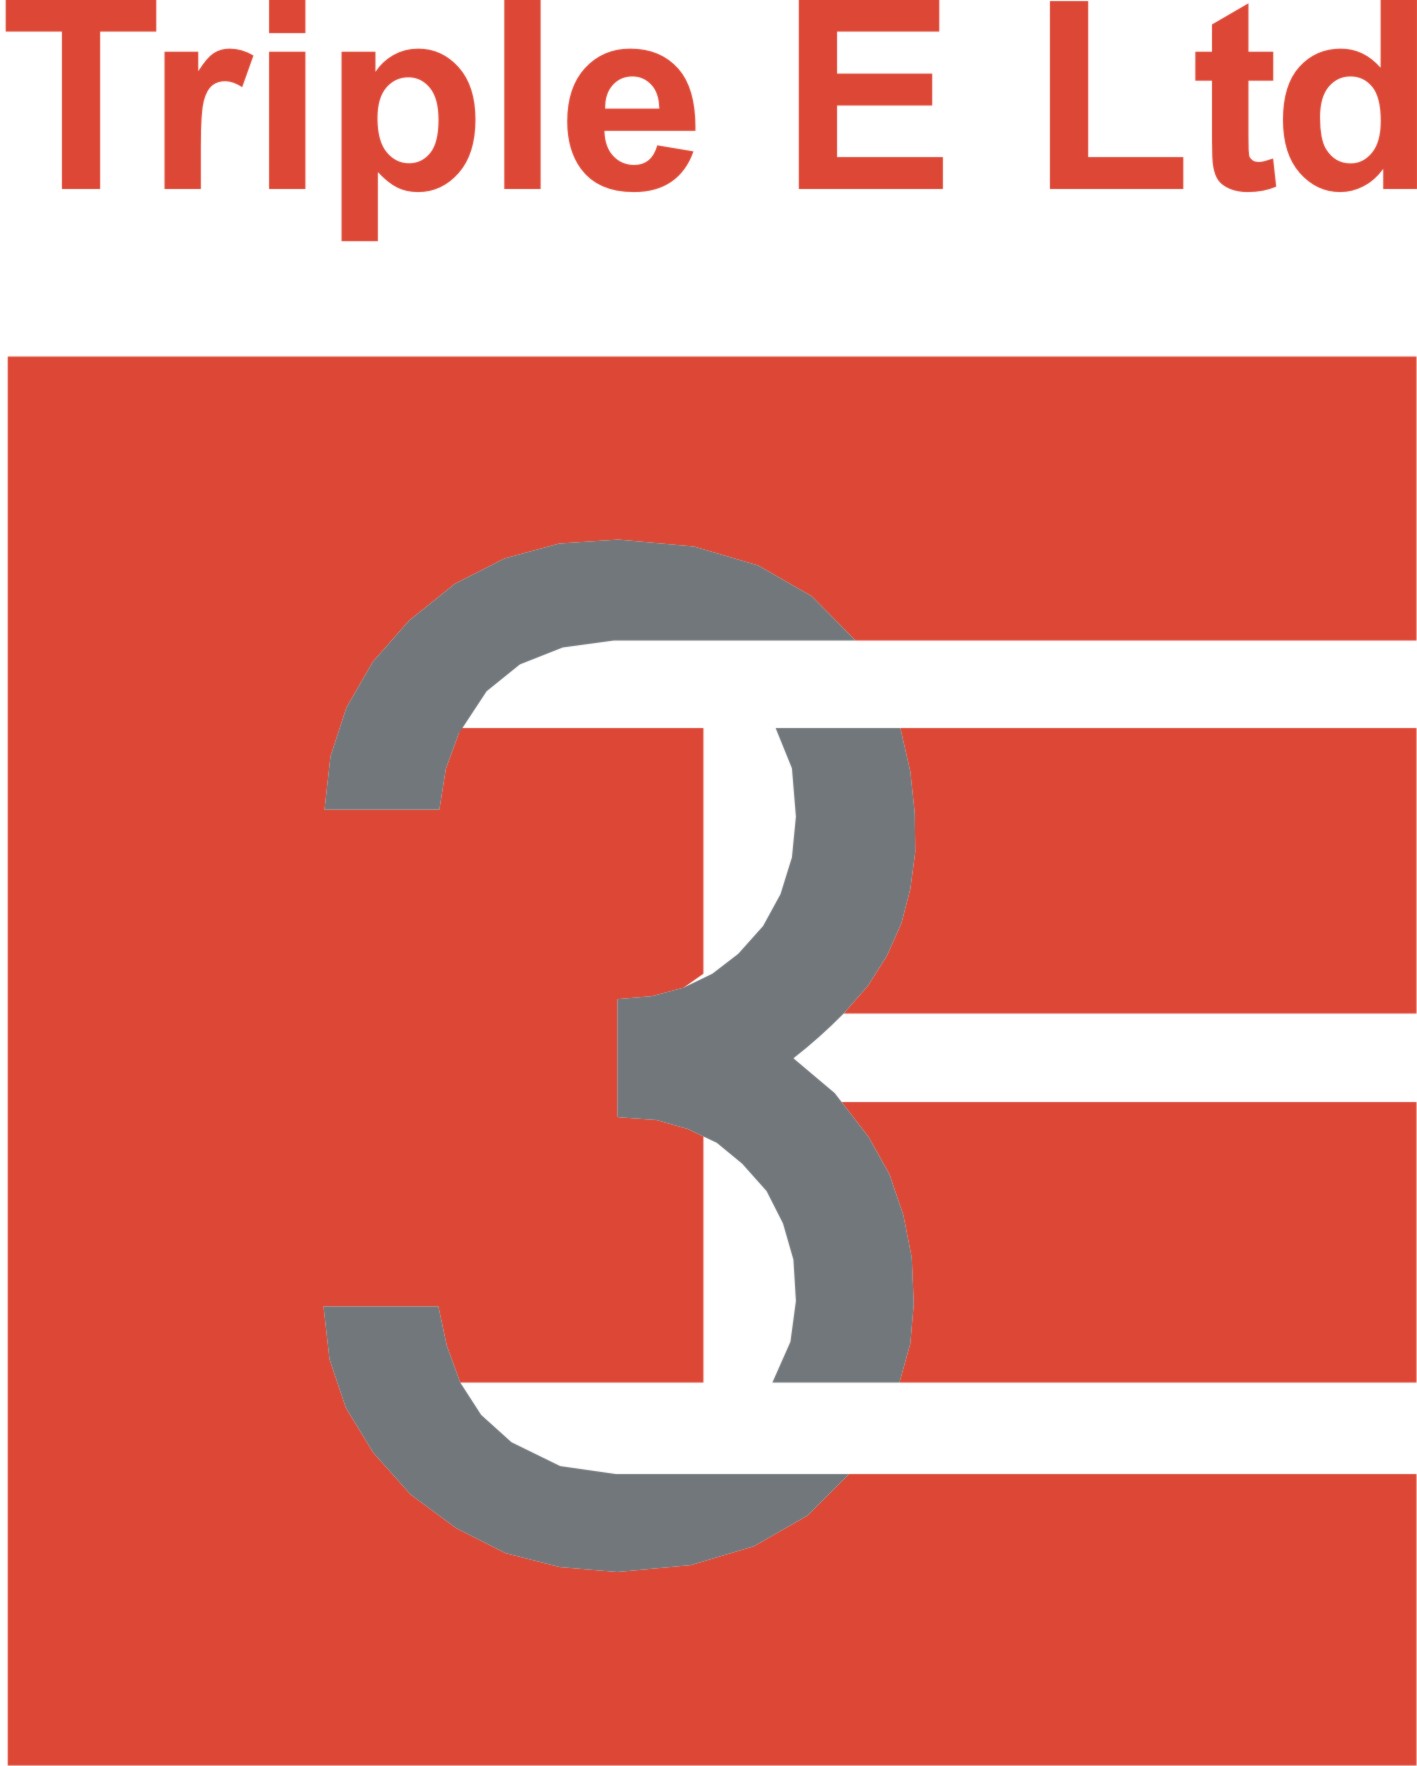 EEE-logo-1200dpi